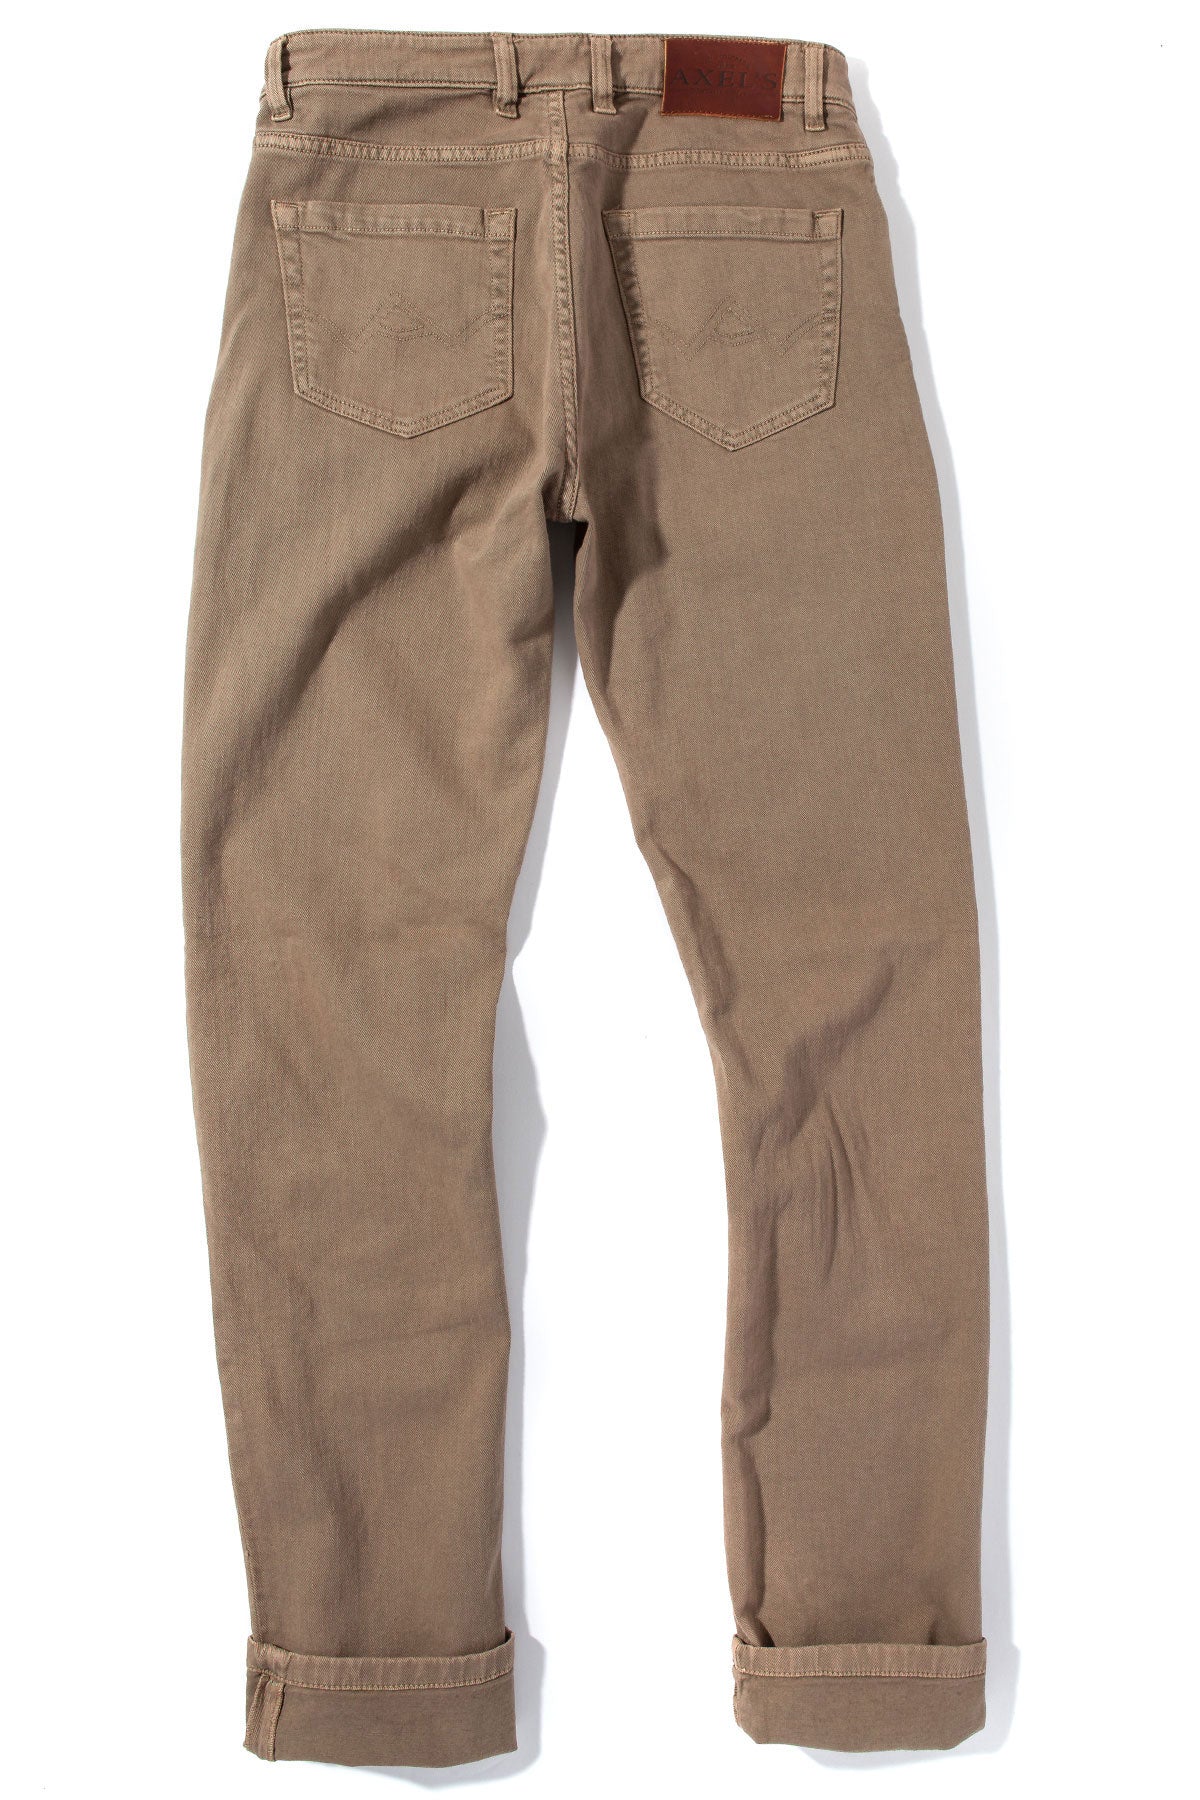 Taos Slim Cotton/Linen Denim in Tortora | Mens - Pants - 5 Pocket | Axels Premium Denim